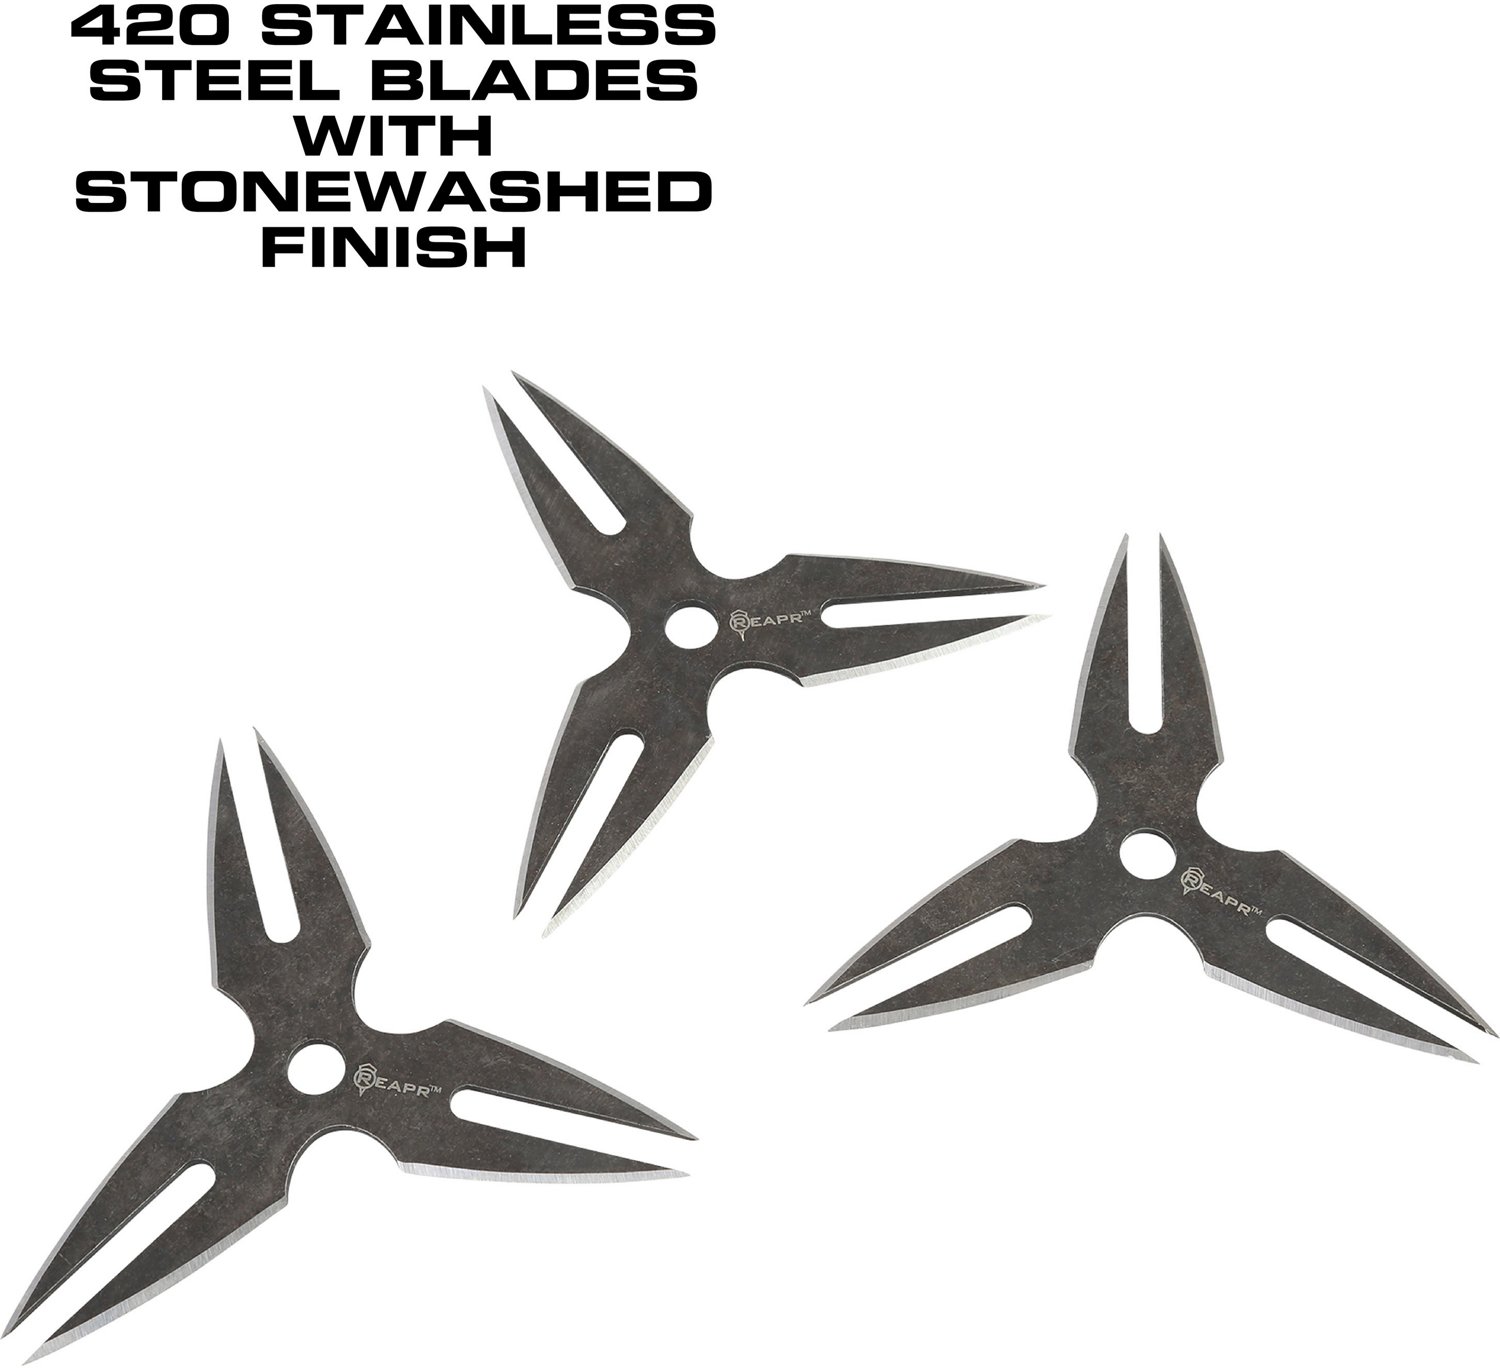 Tiger Steel Kunai Ninja Throwing Knives For Sale, All Ninja Gear: Largest  Selection of Ninja Weapons, Throwing Stars